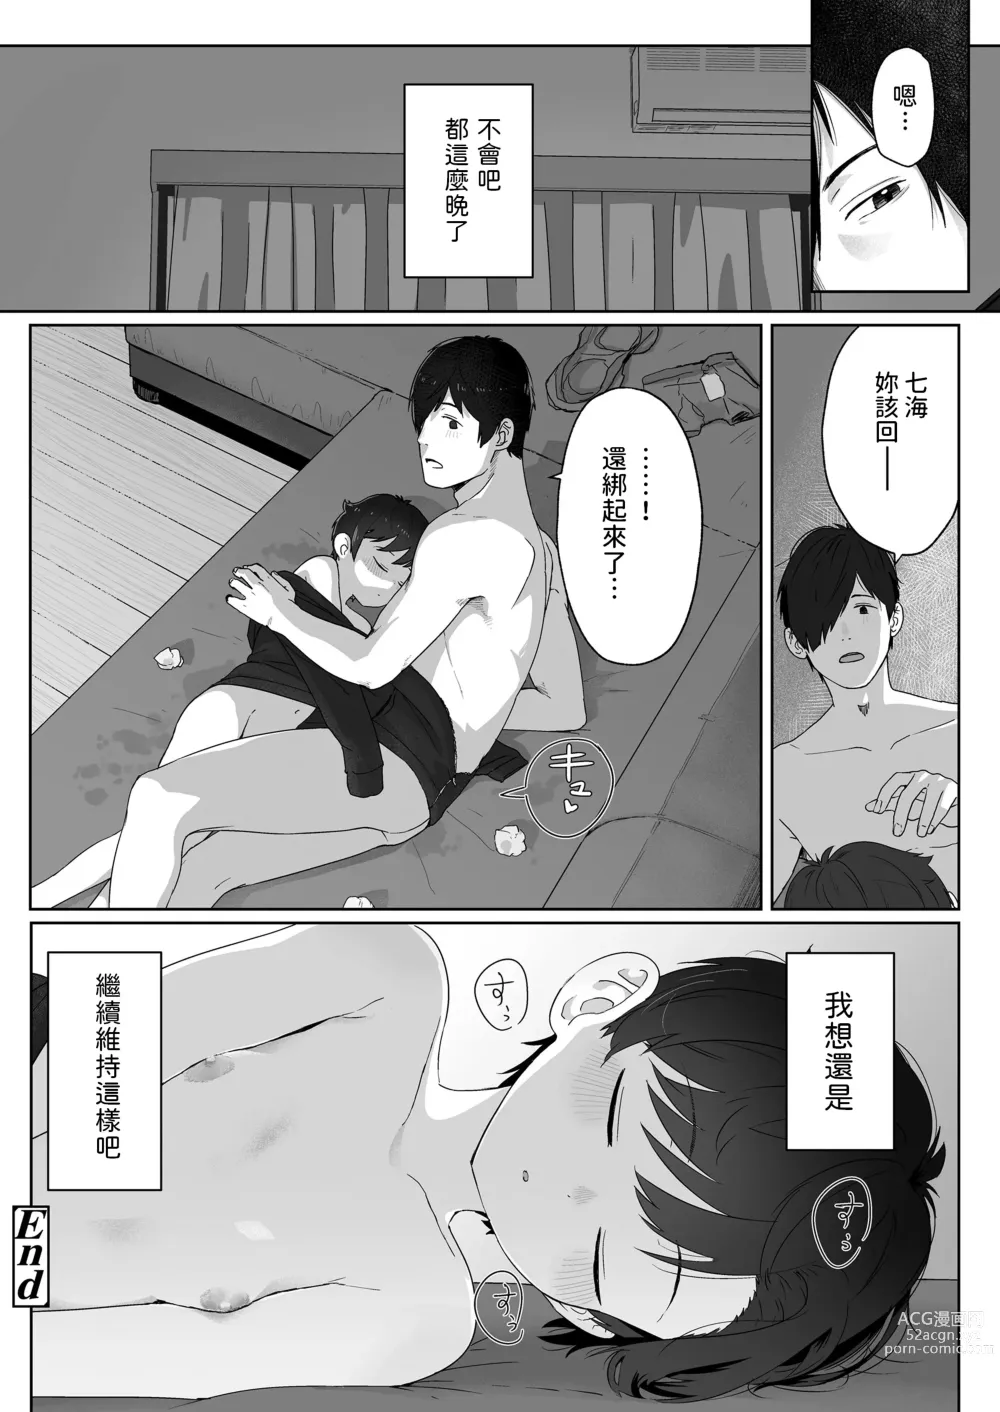 Page 32 of manga Ore ga Taberu kara